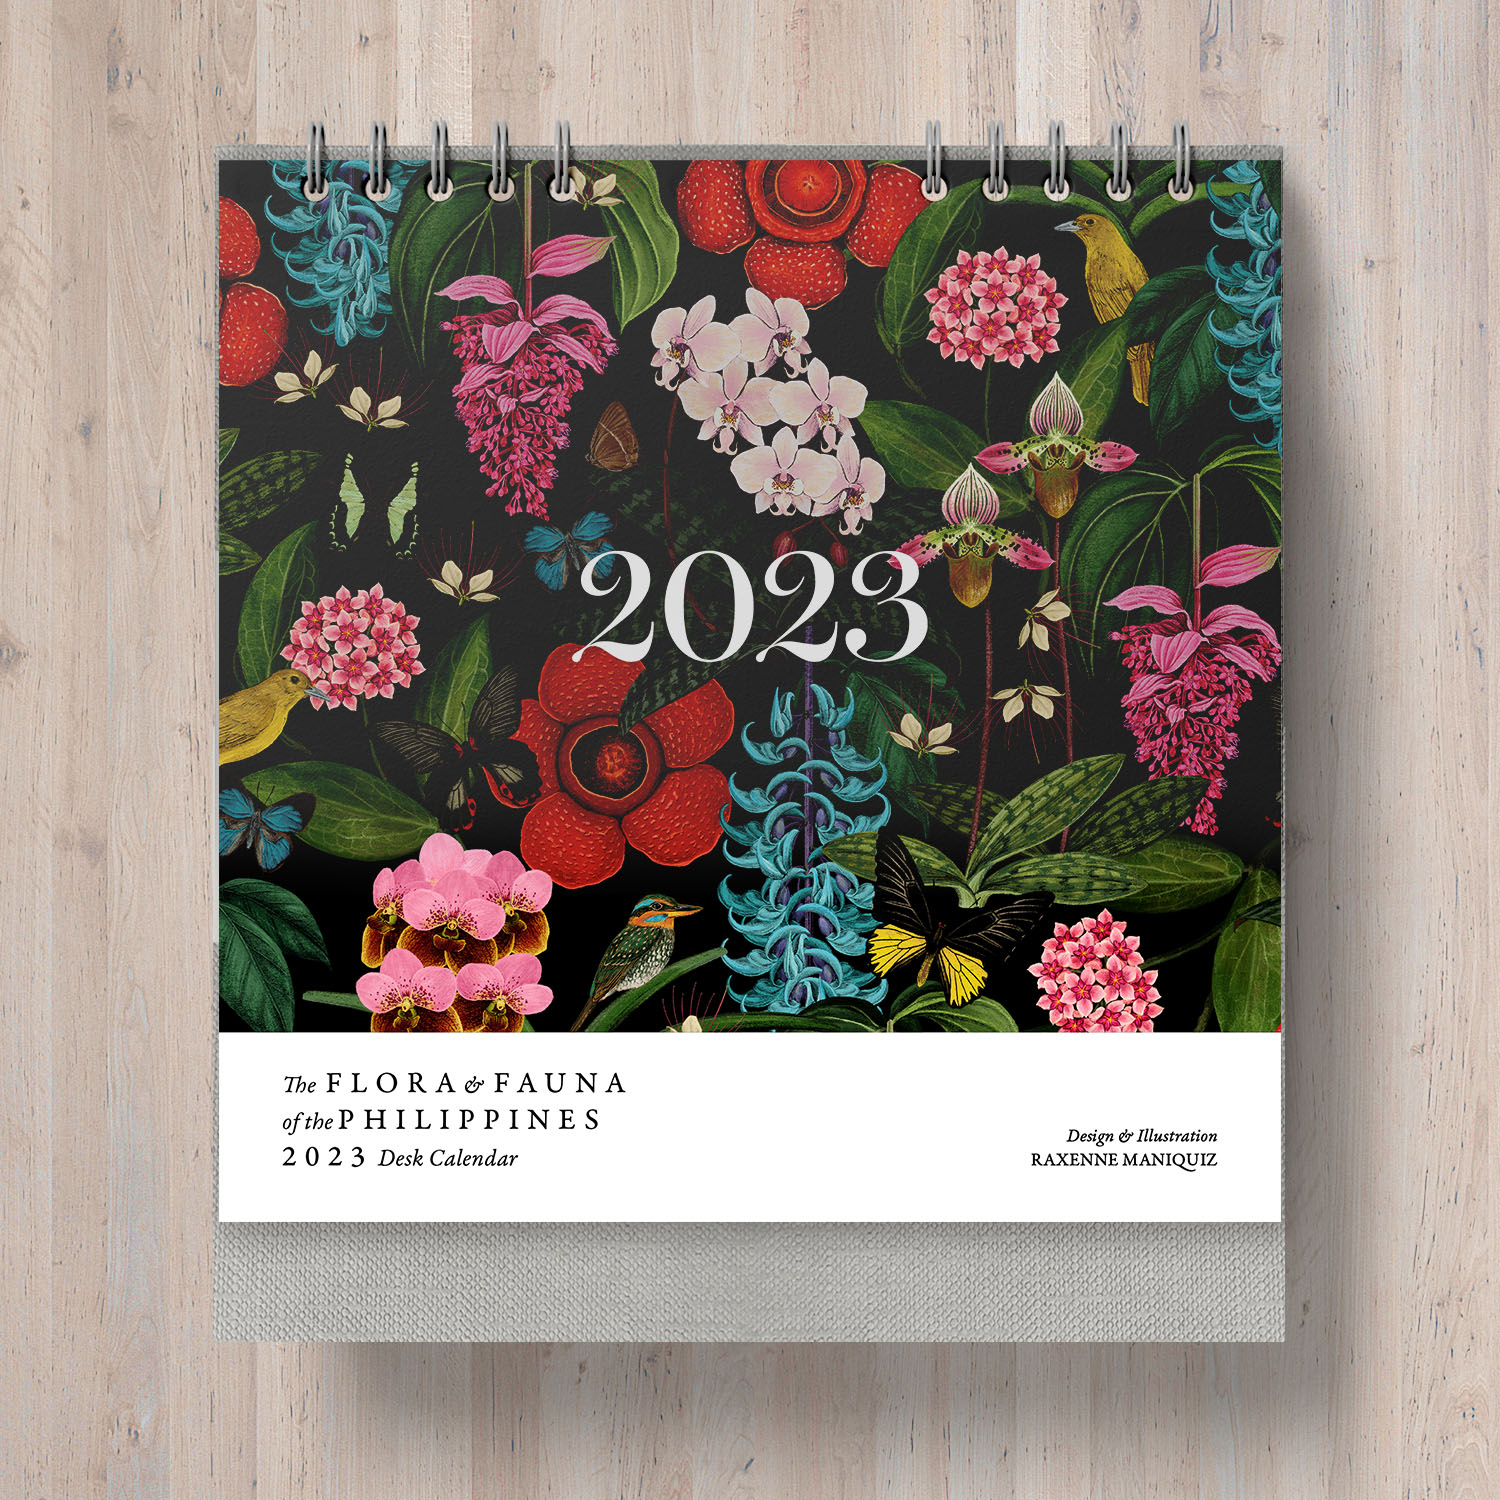 ifex-2023-desk-calendar-the-flora-fauna-of-the-philippines-7-x-7